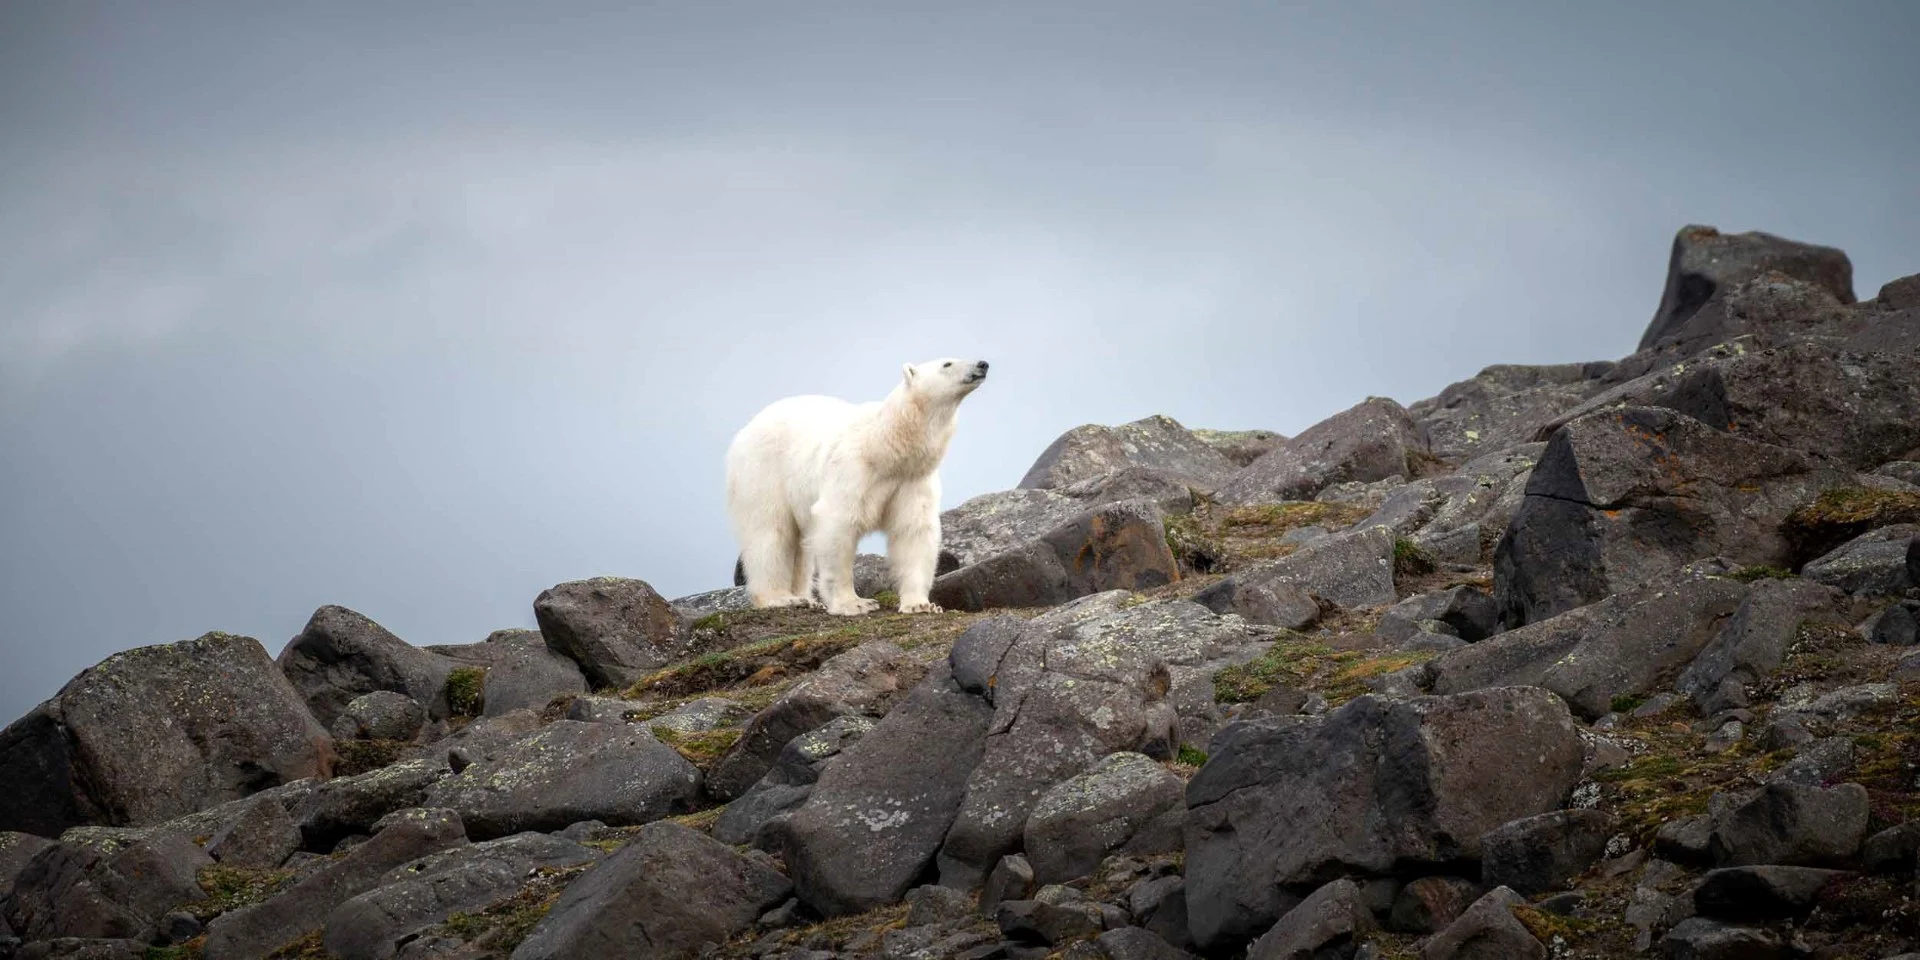 King of the Ice | The Svalbard Polar Bear.